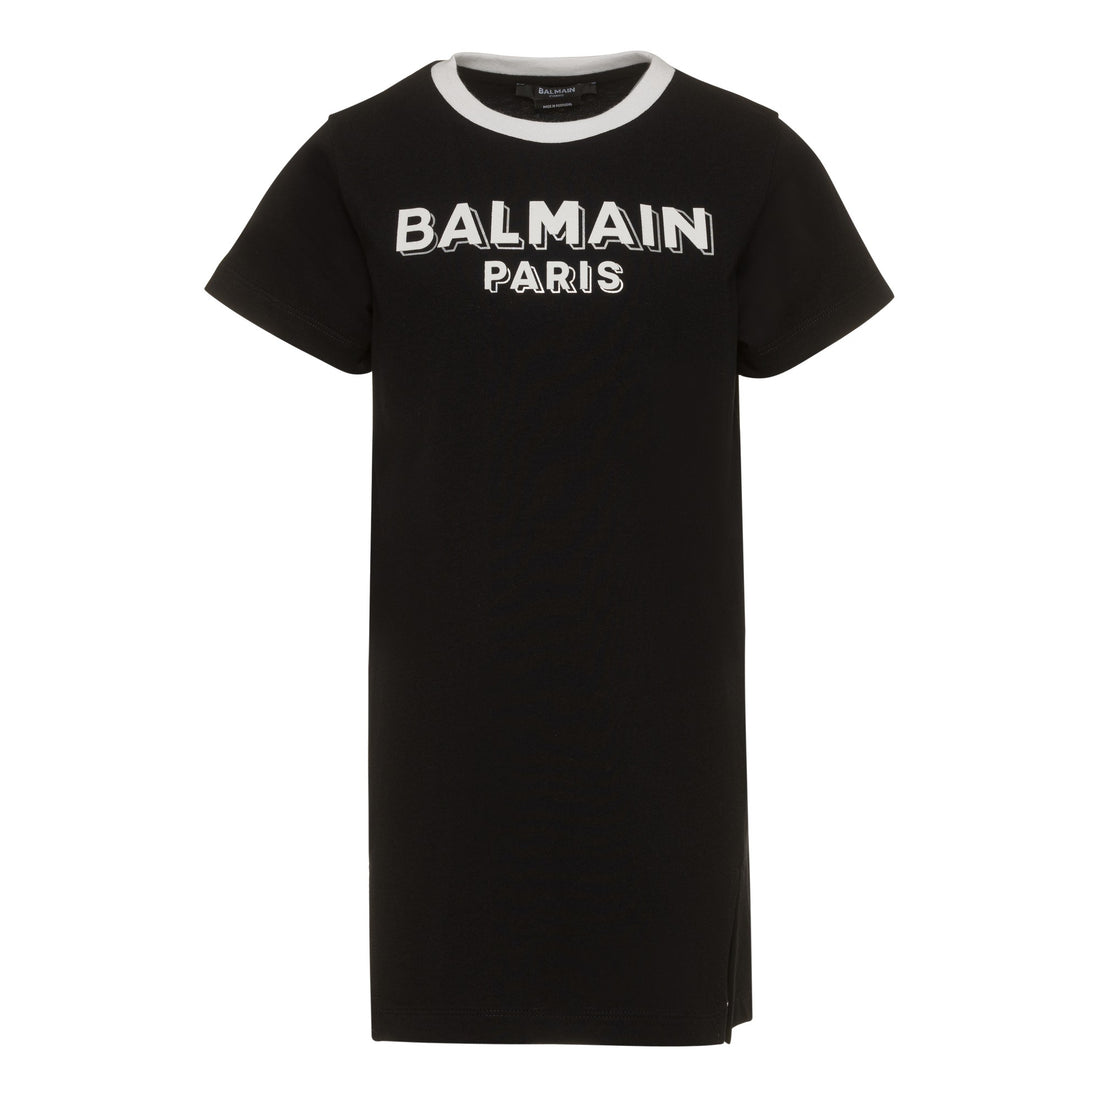 Balmain Black Jersey Dress